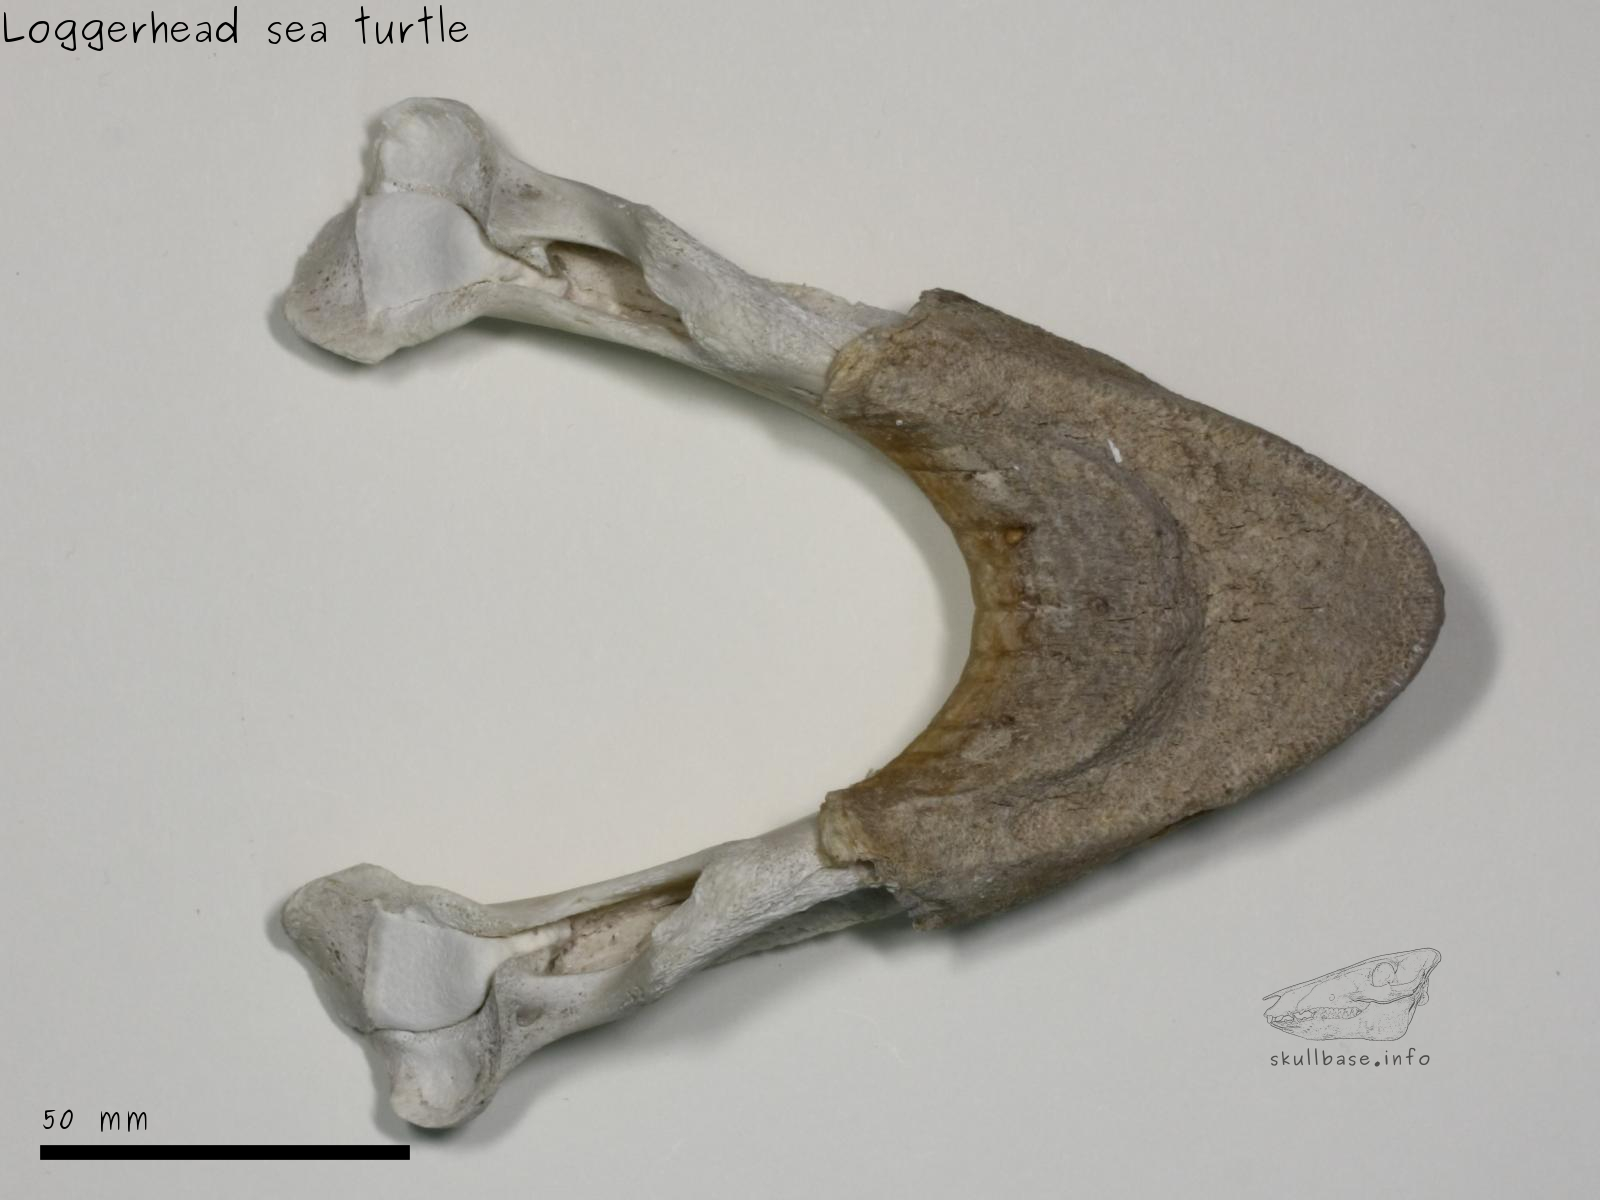 Loggerhead sea turtle (Caretta caretta) jaw